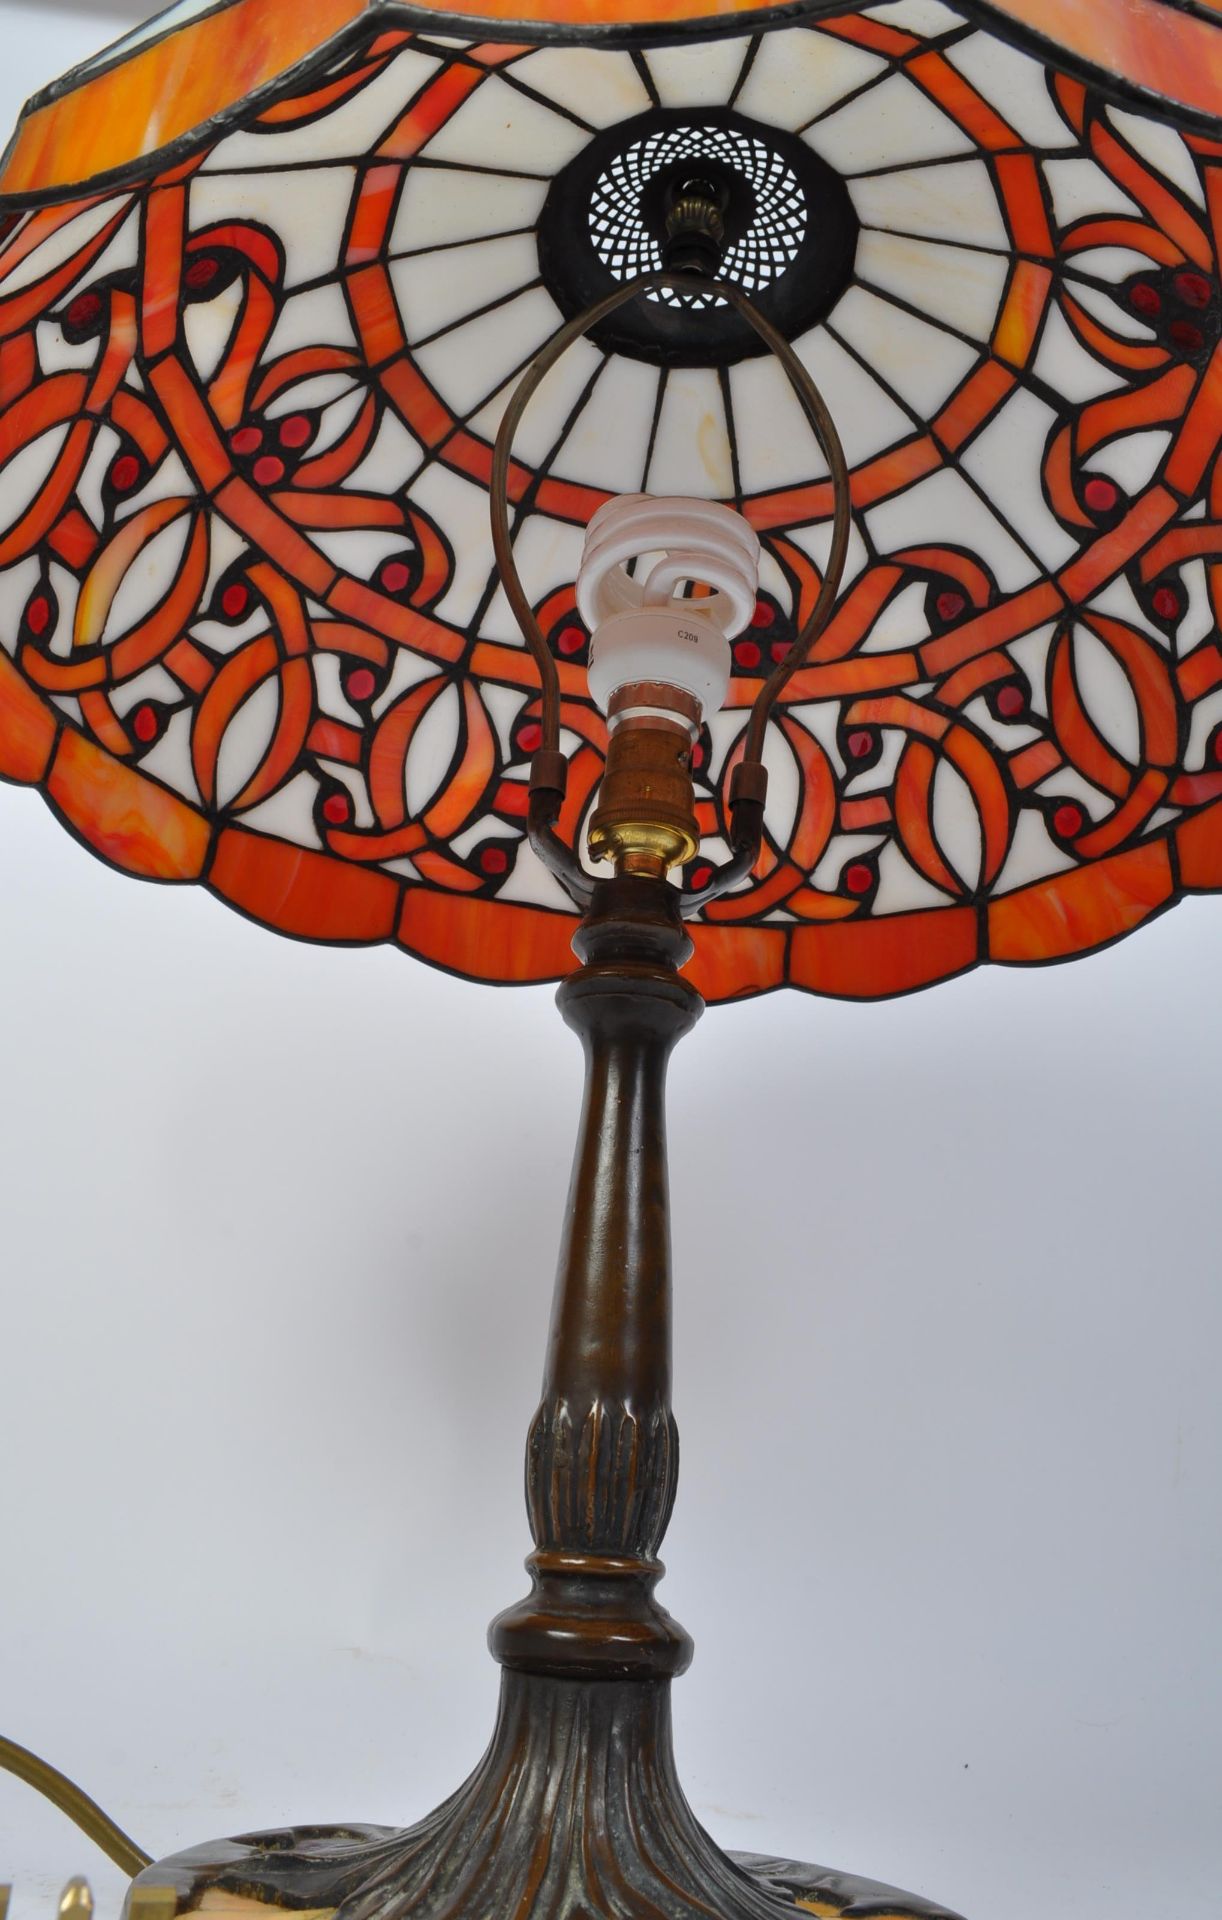 LARGE TIFFANY ART NOUVEAU STYLE TABLE LAMP - Image 4 of 7